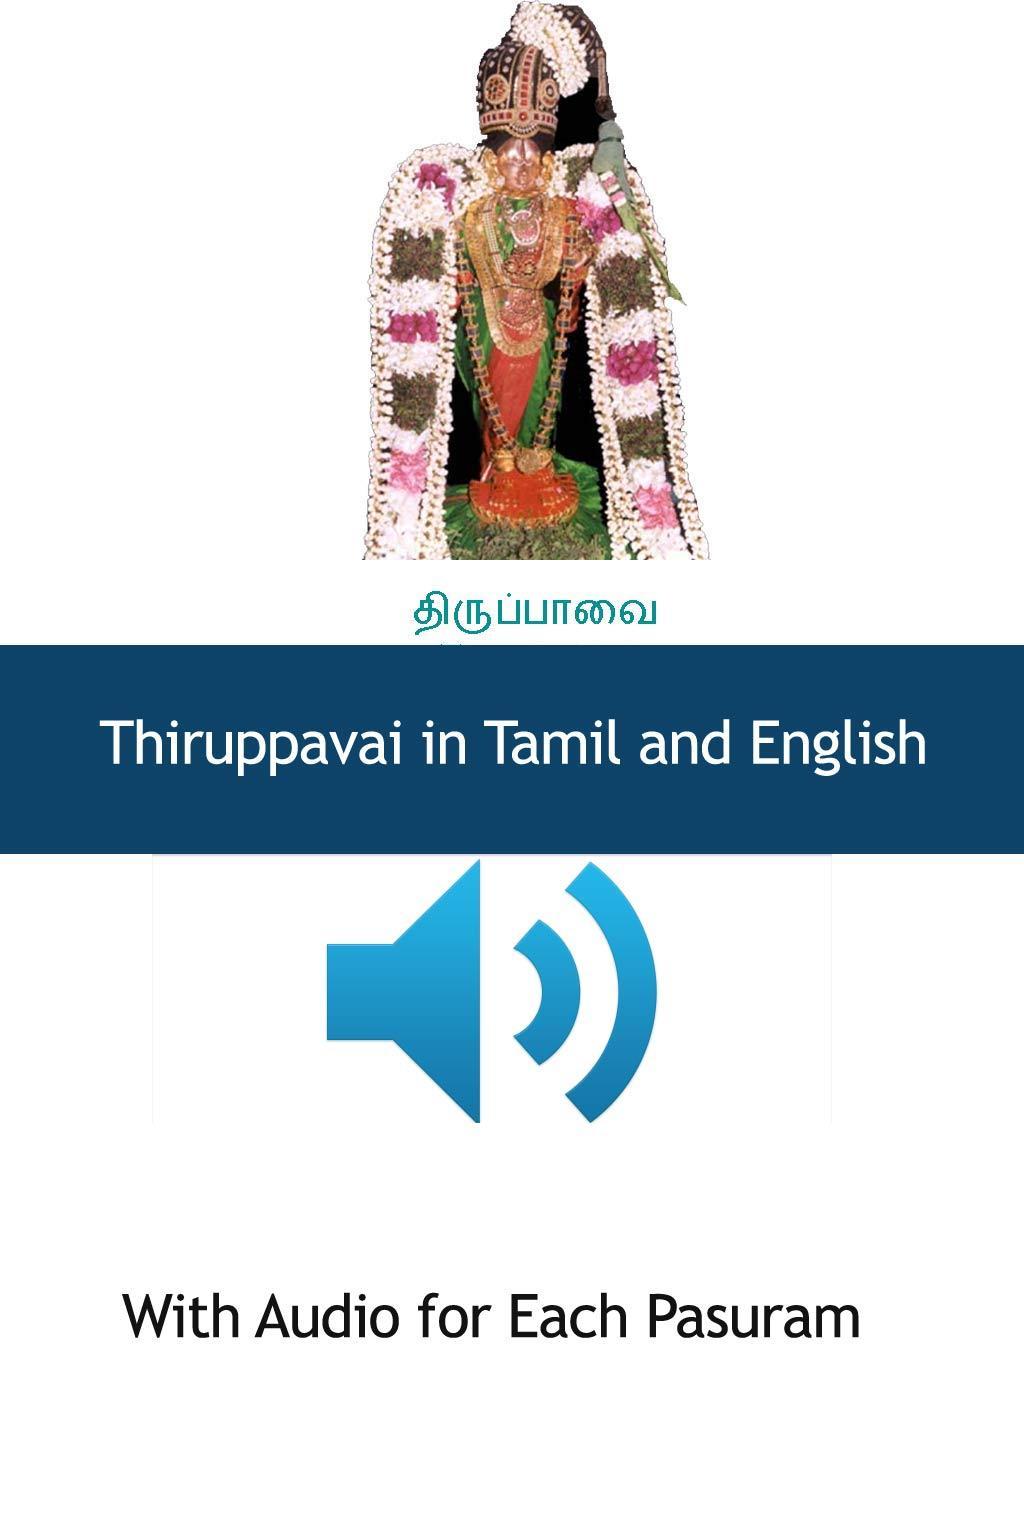 Andaal Thiruppavai Pasurams 3.0 Screenshot 1